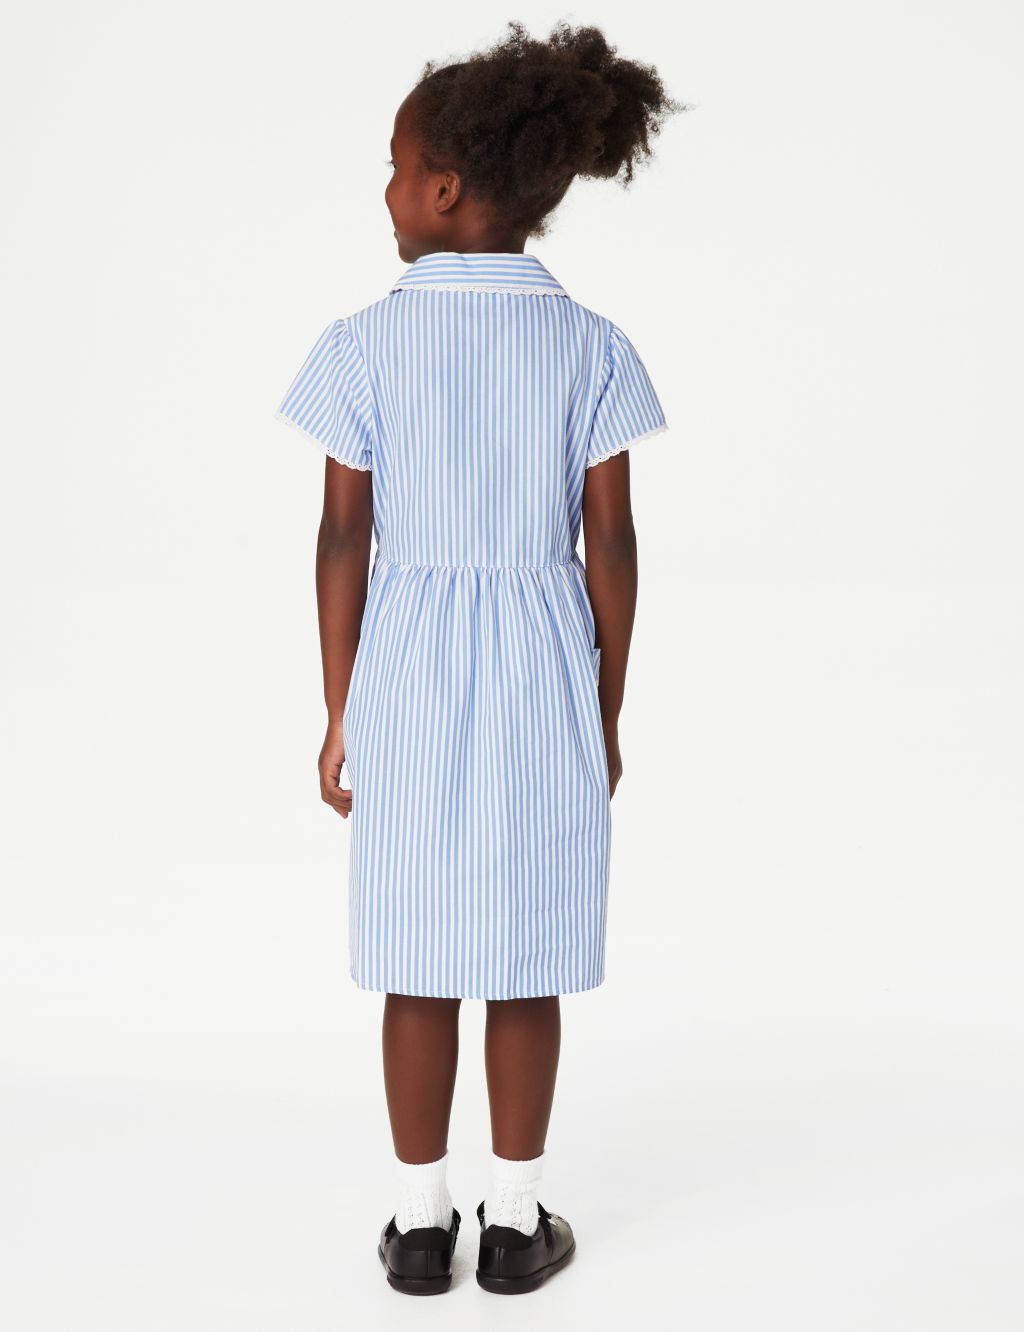 Girls' Pure Cotton Striped School Dress (2-14 Yrs) image 4